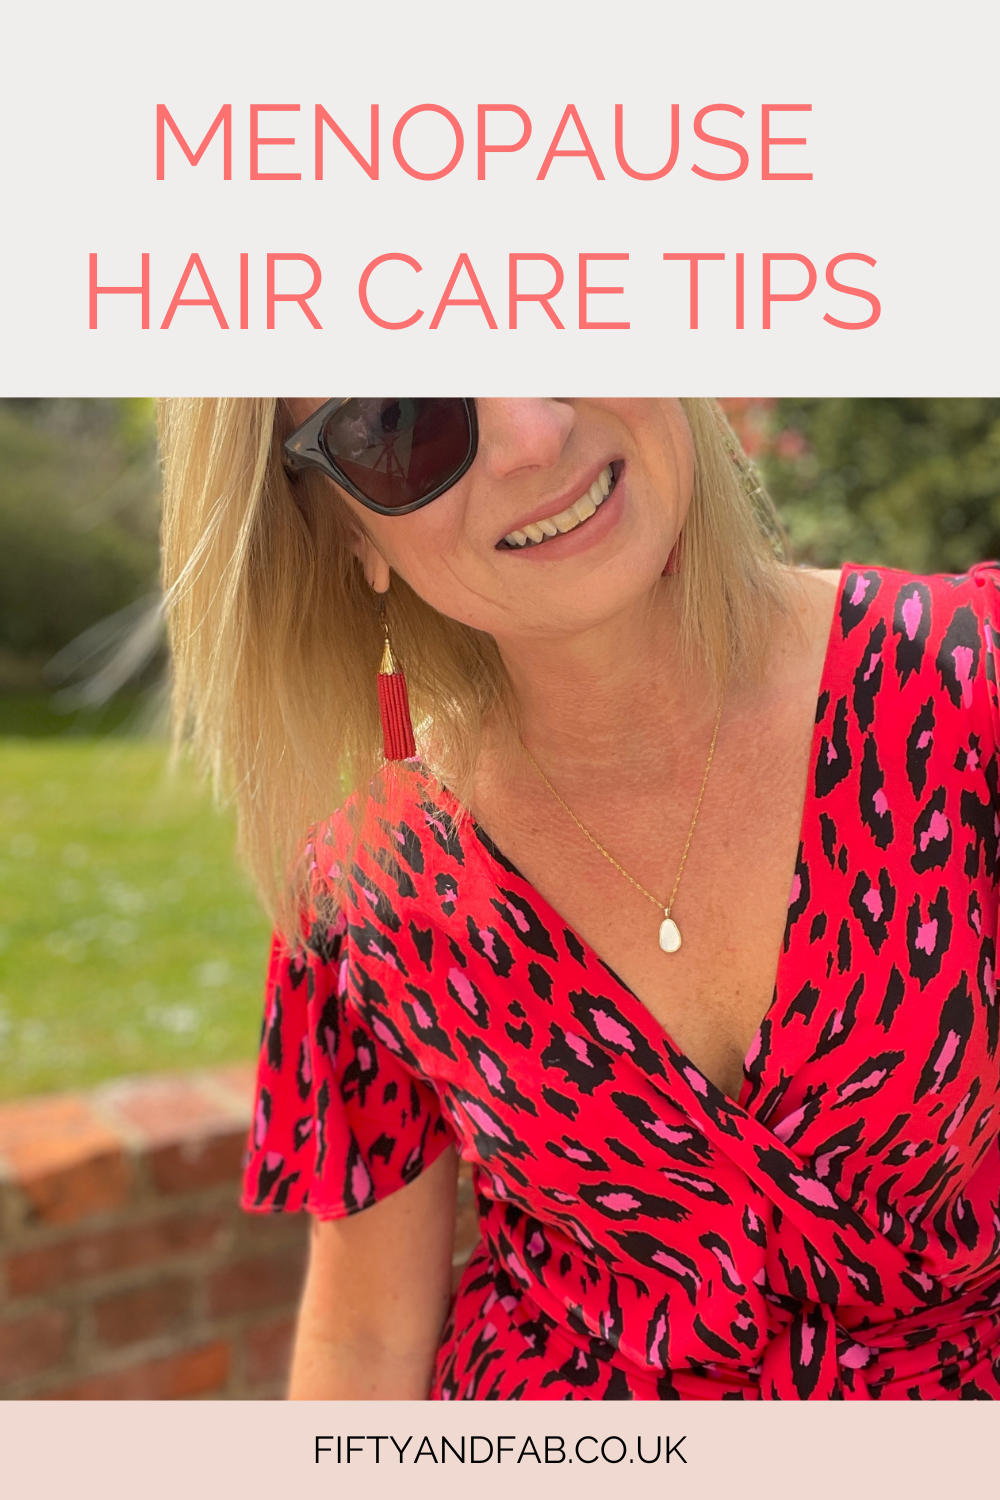 Menopause hair care tips